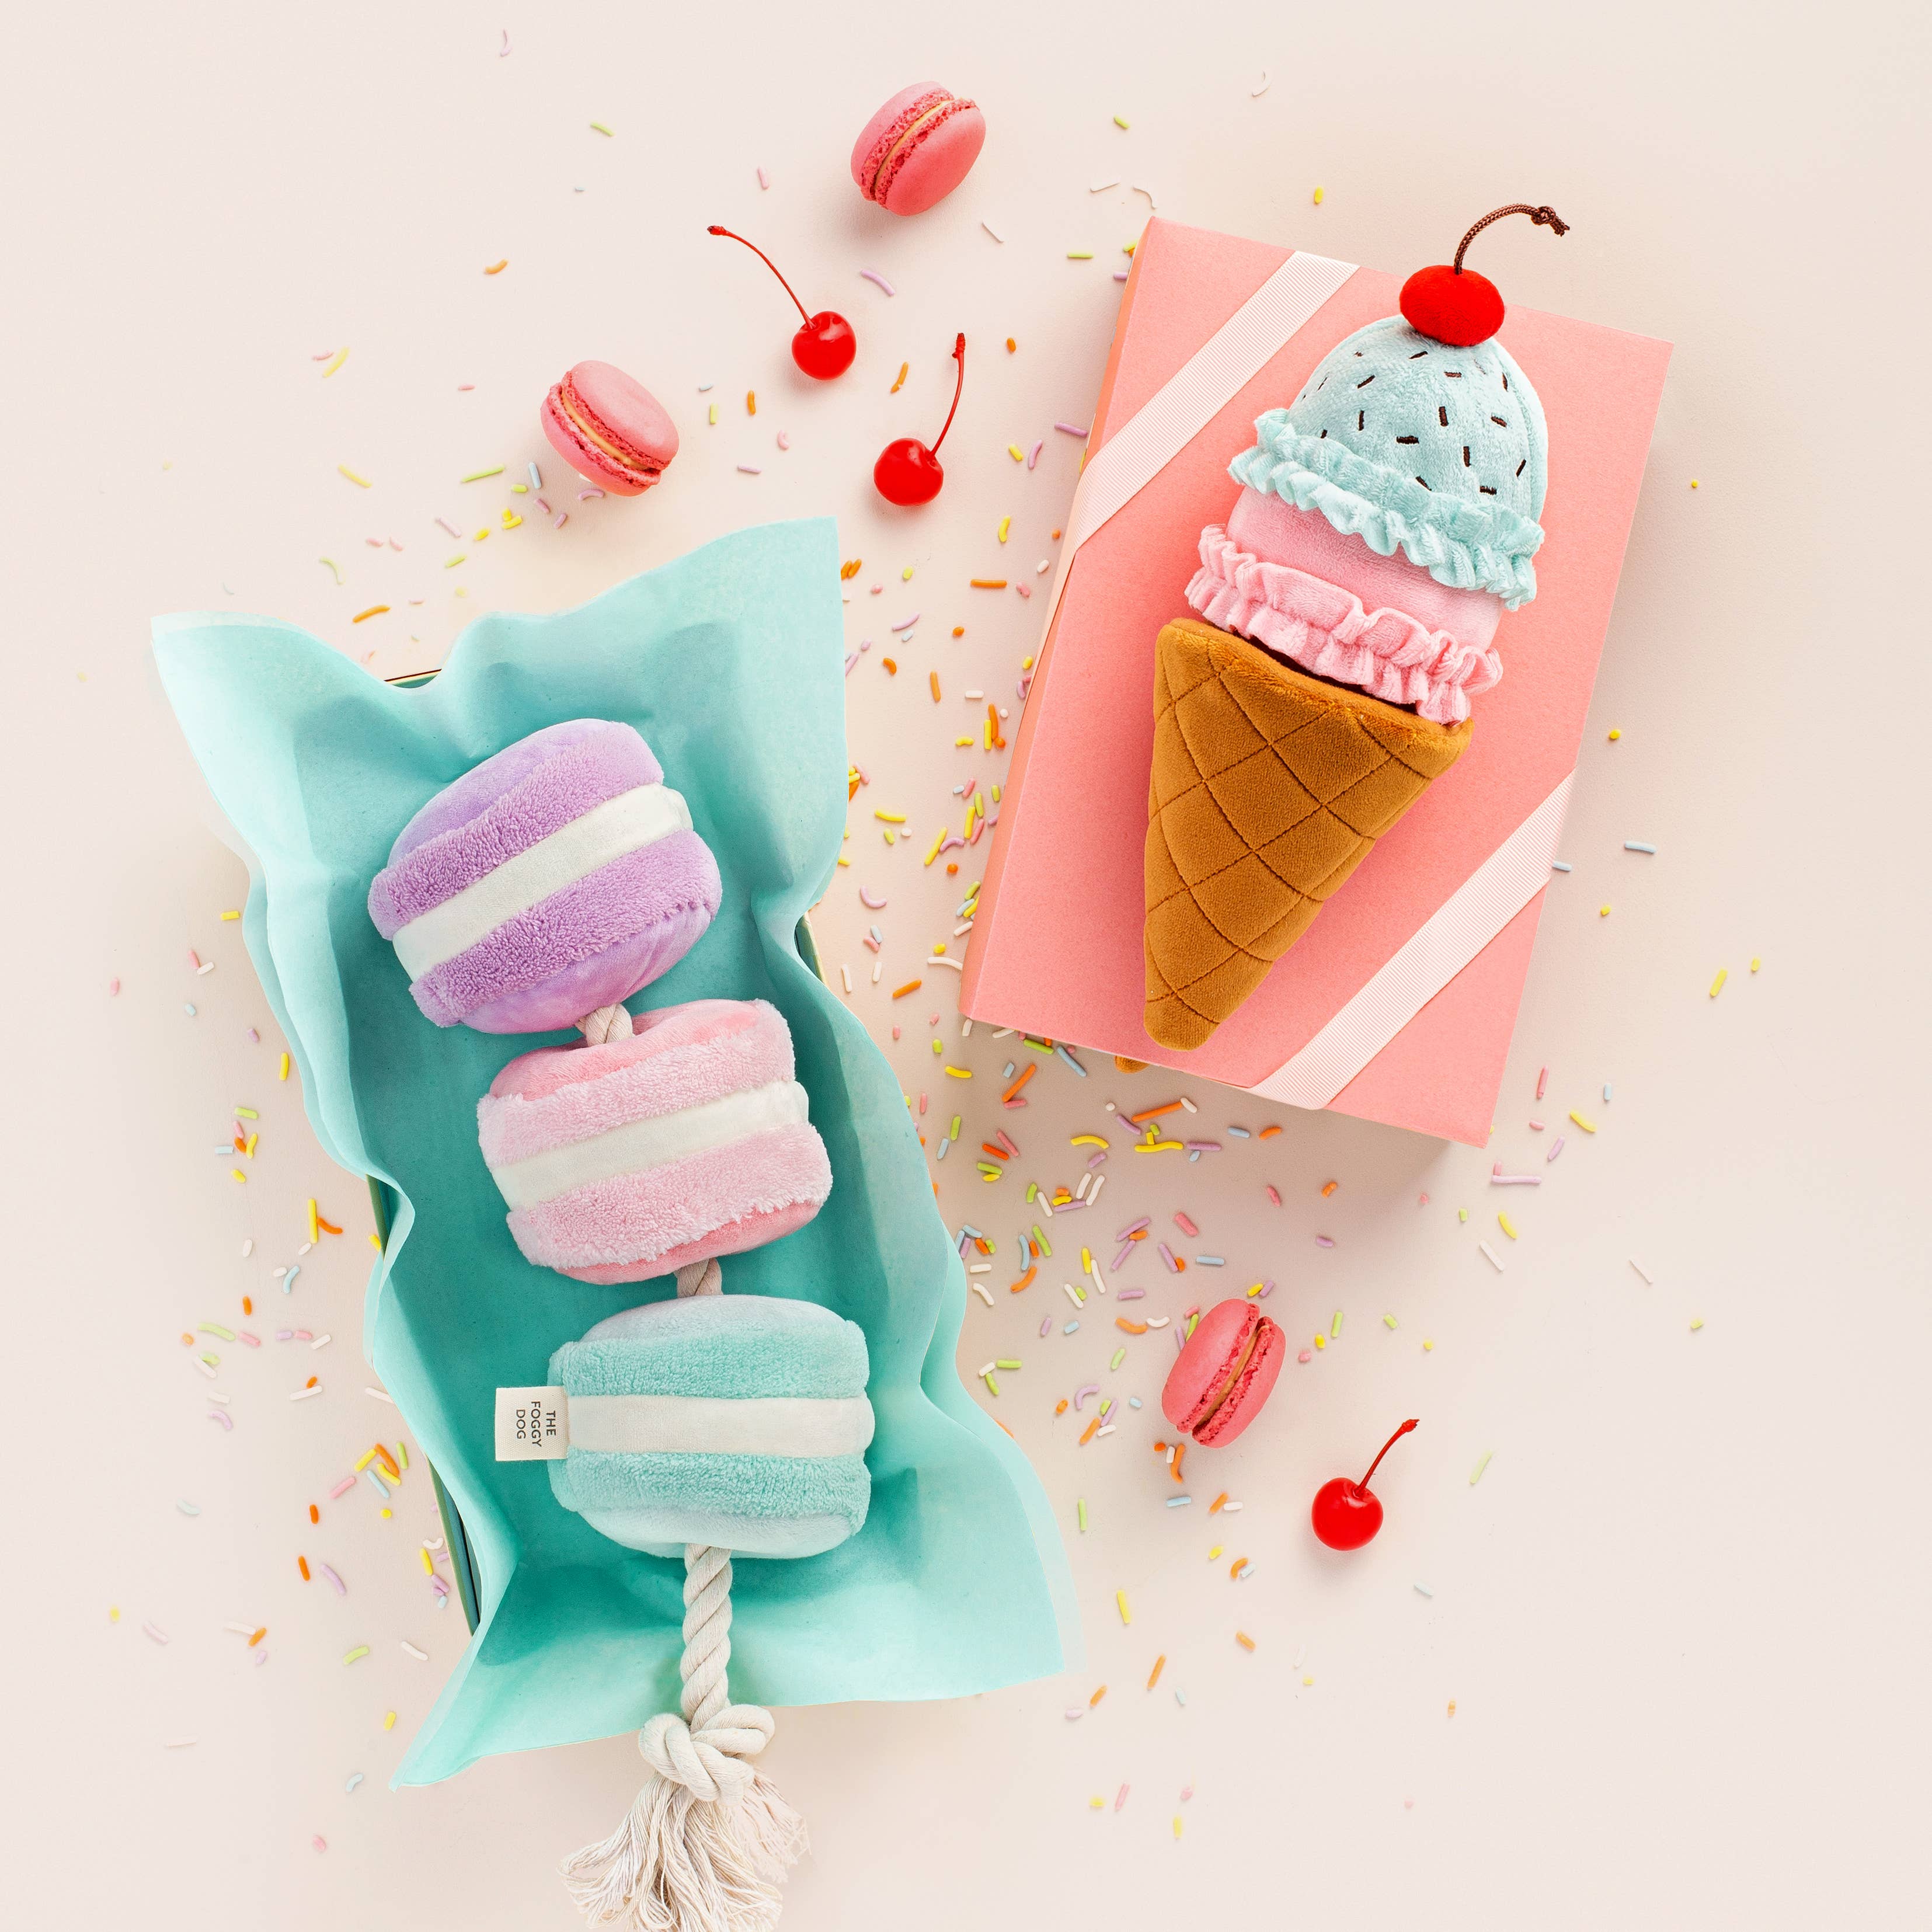 The Foggy Dog - Ice Cream Interactive Snuffle Valentine's Day Dog Toy